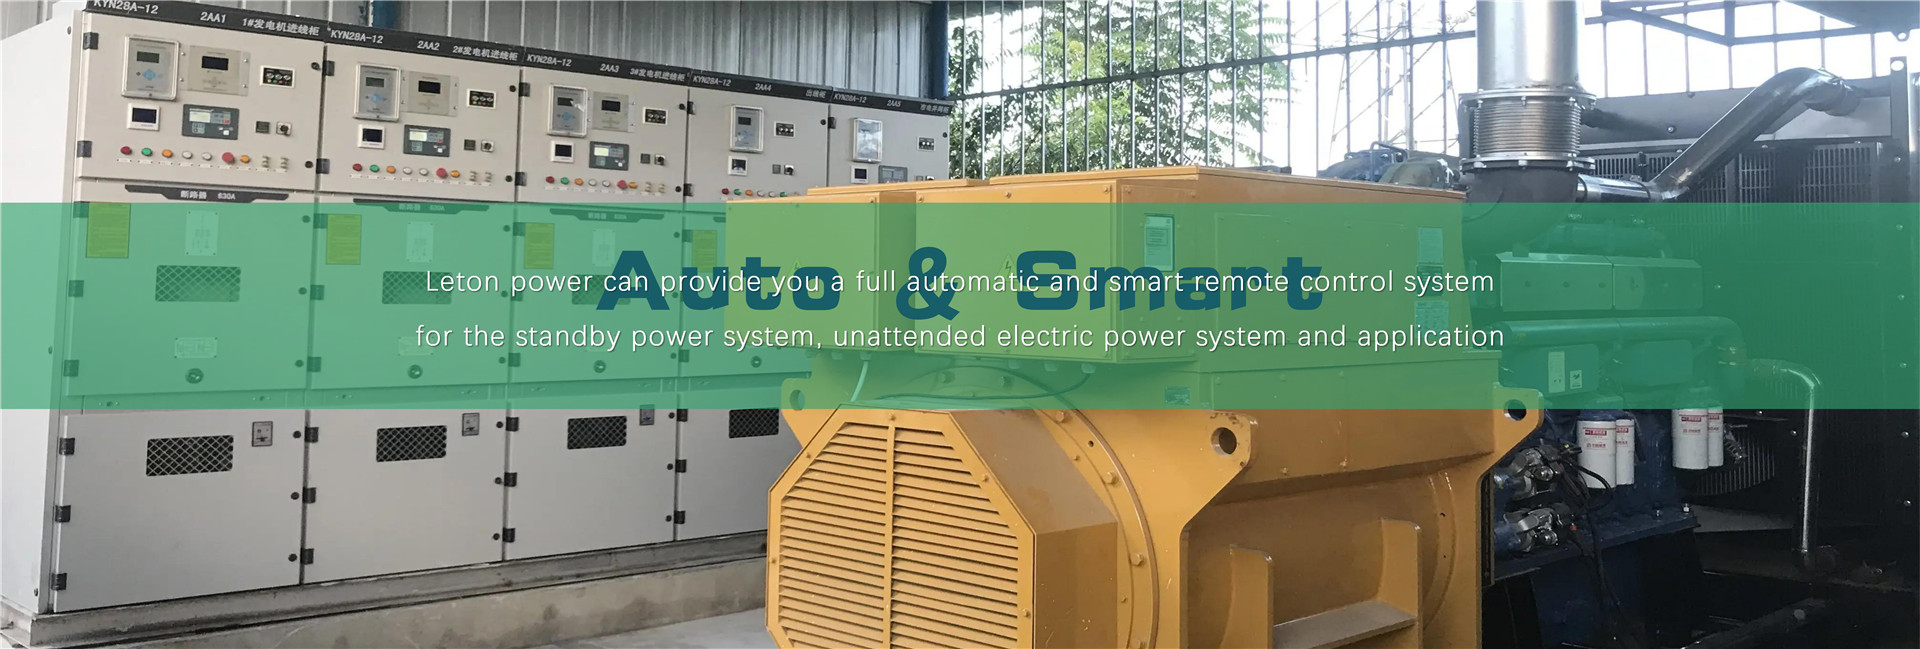 Automatski dizel generator sa AMF ATS Diesel generator daljinskim upravljanjem Leton powerImage